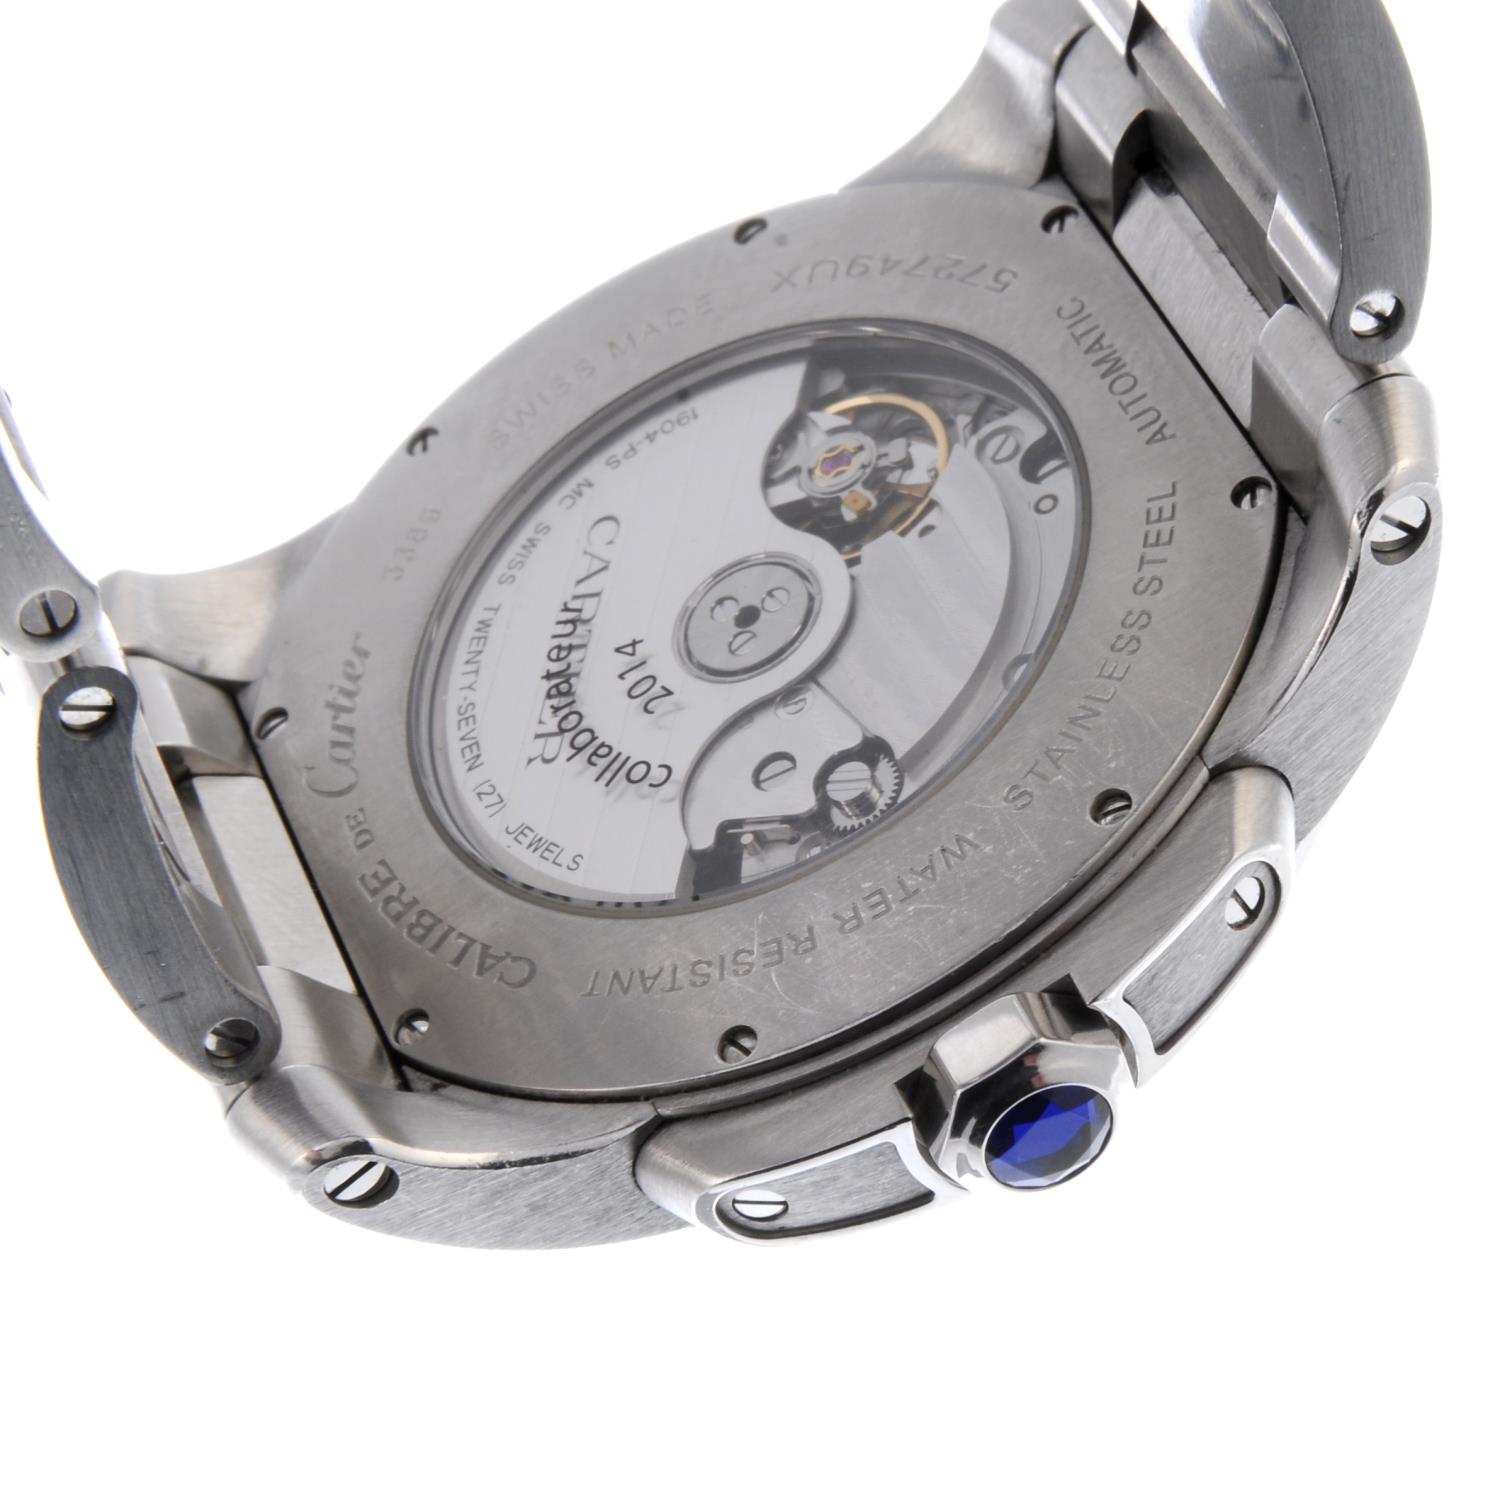 CARTIER - a gentleman's Calibre de Cartier bracelet watch. - Image 2 of 3